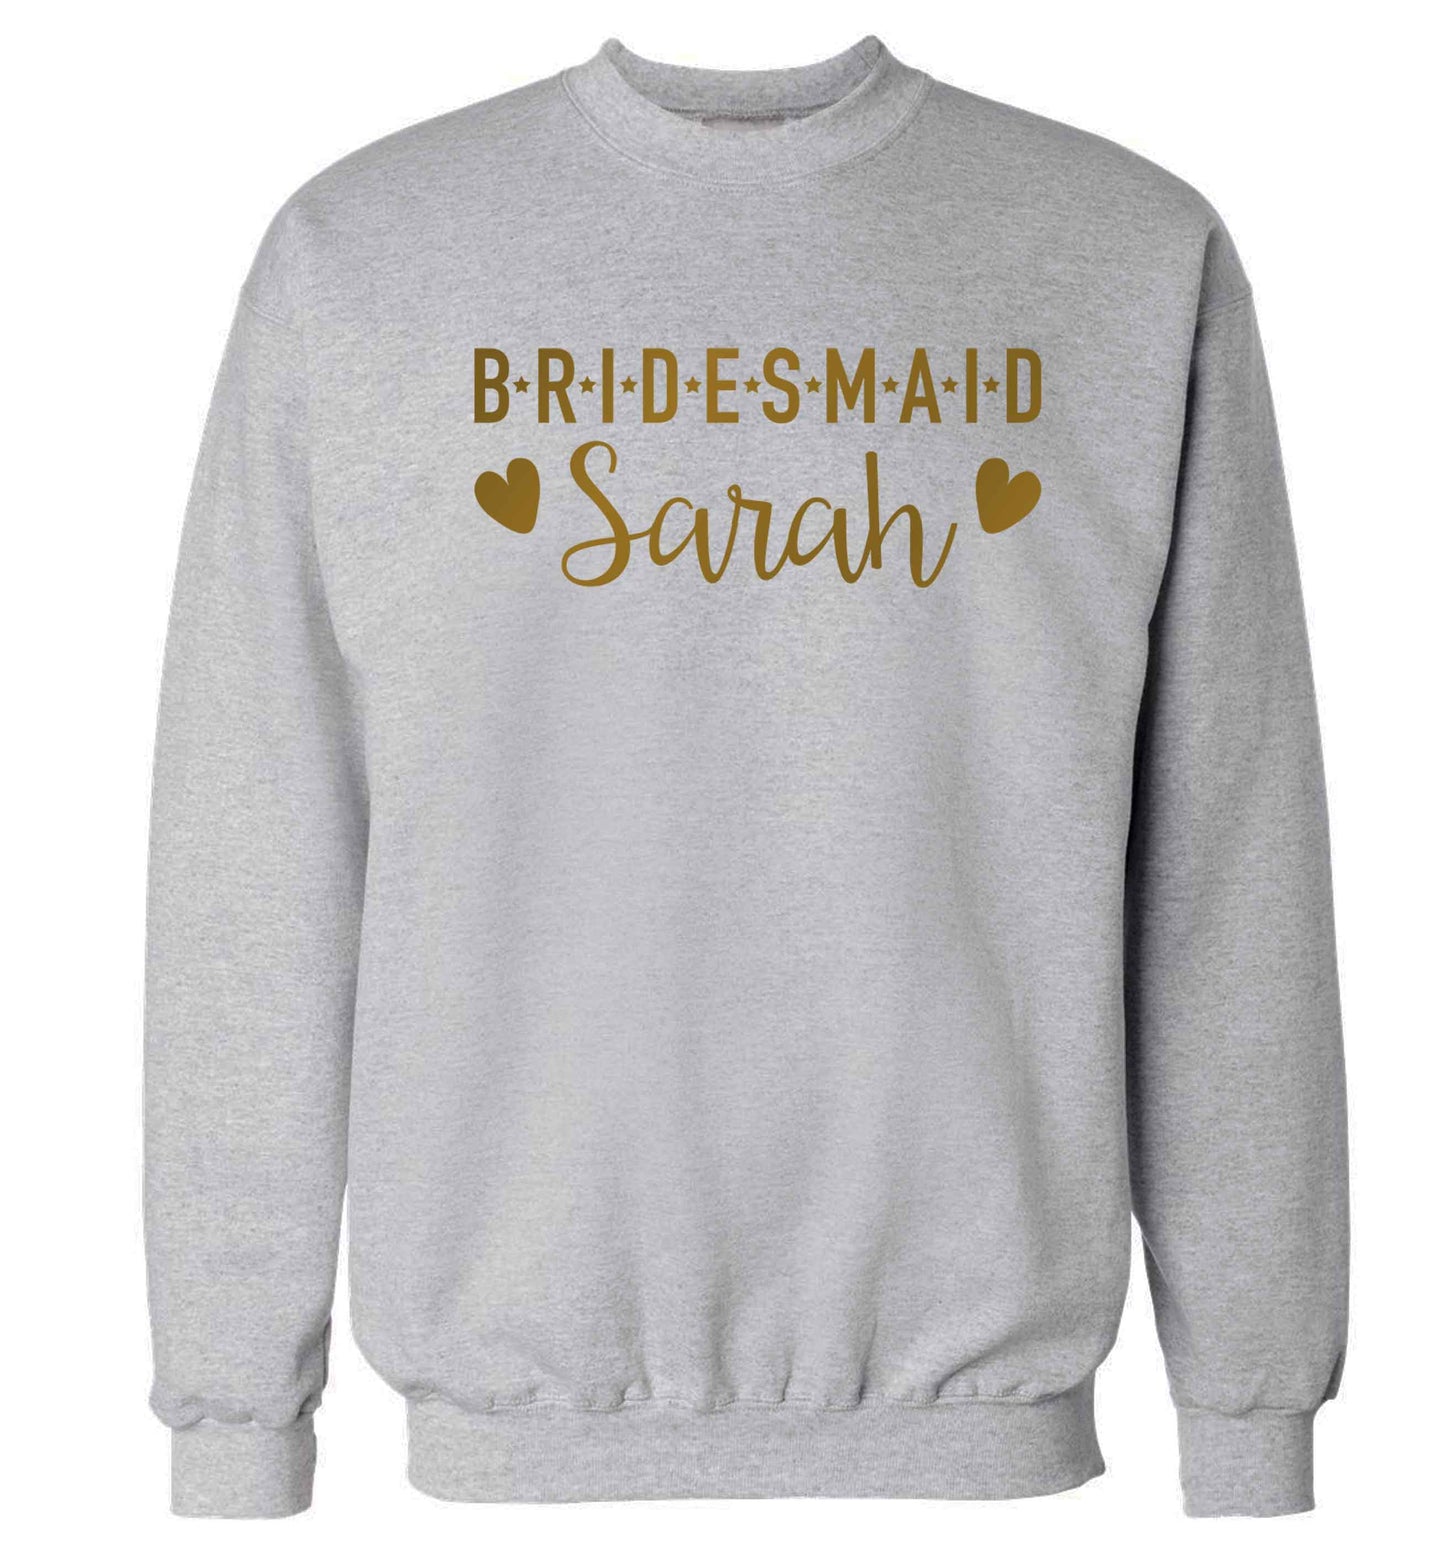 Personalised bridesmaid Adult's unisex grey Sweater 2XL